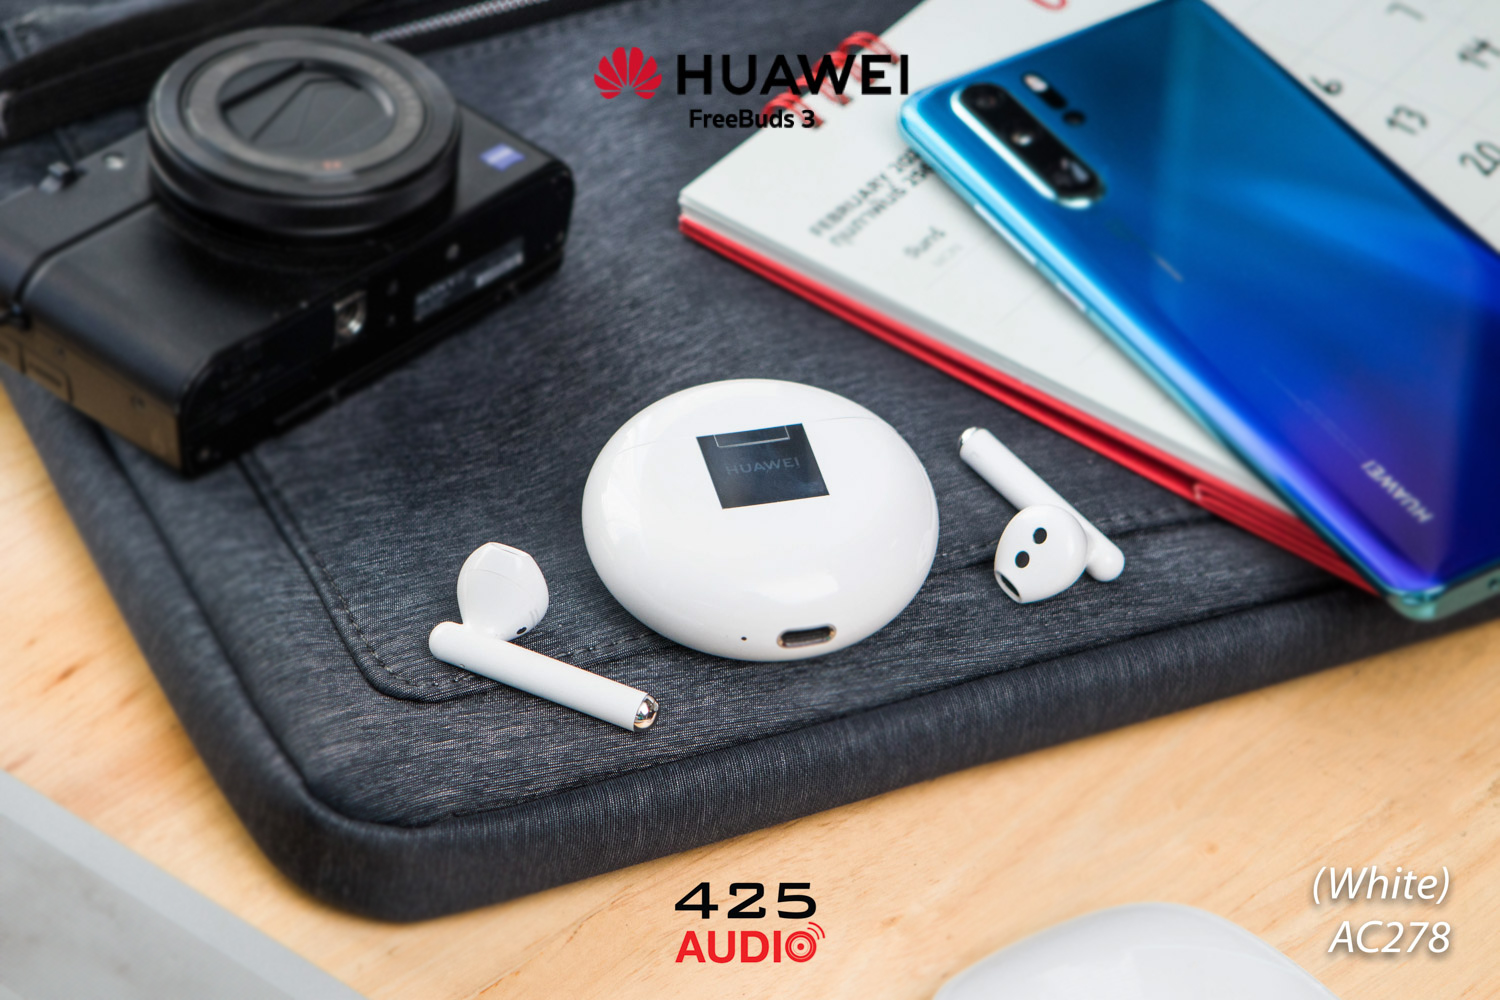 huawei freebuds 3,หูฟังไร้สาย,ทรง earbud,bluetooth 5.1,active noise cancelling,คุยโทรศัพท์,huawei,wireless charging 